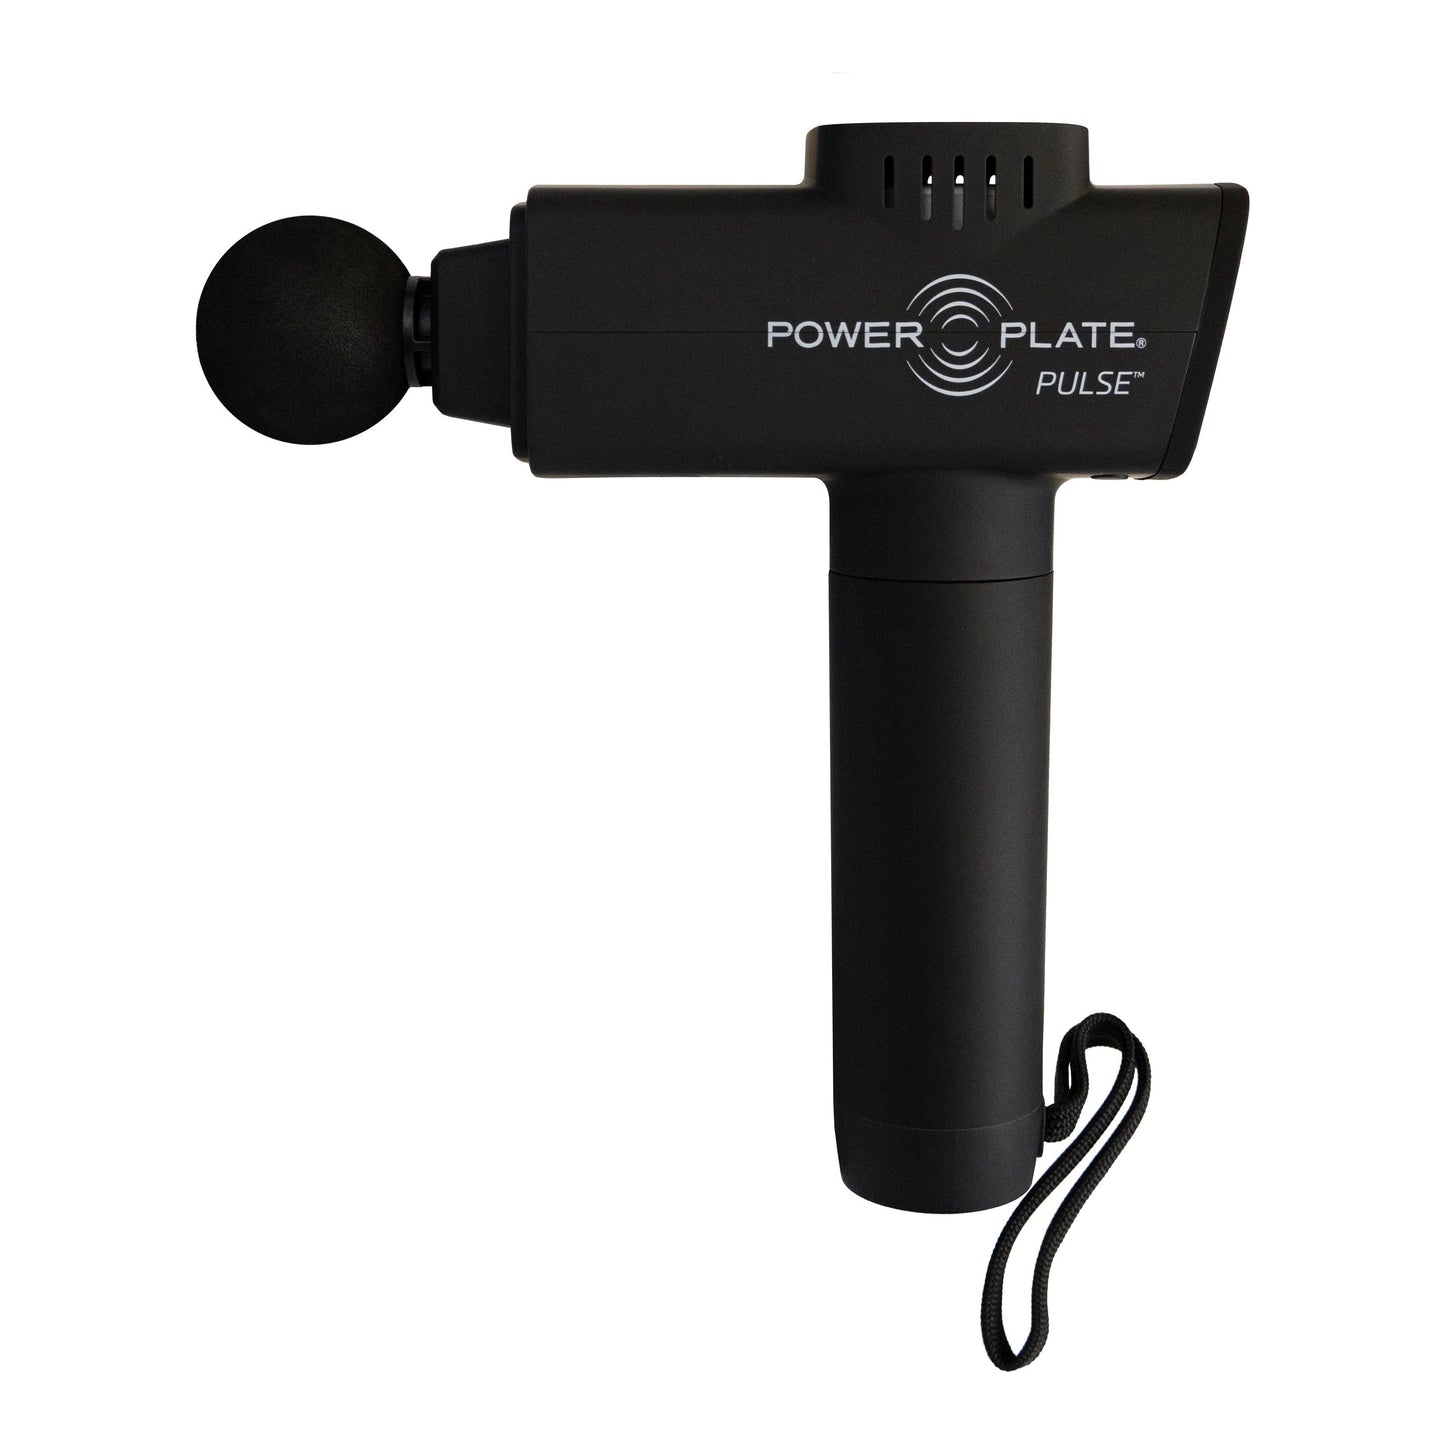 Power Plate Pulse Massage Gun (Black) Additional Options-MOVE